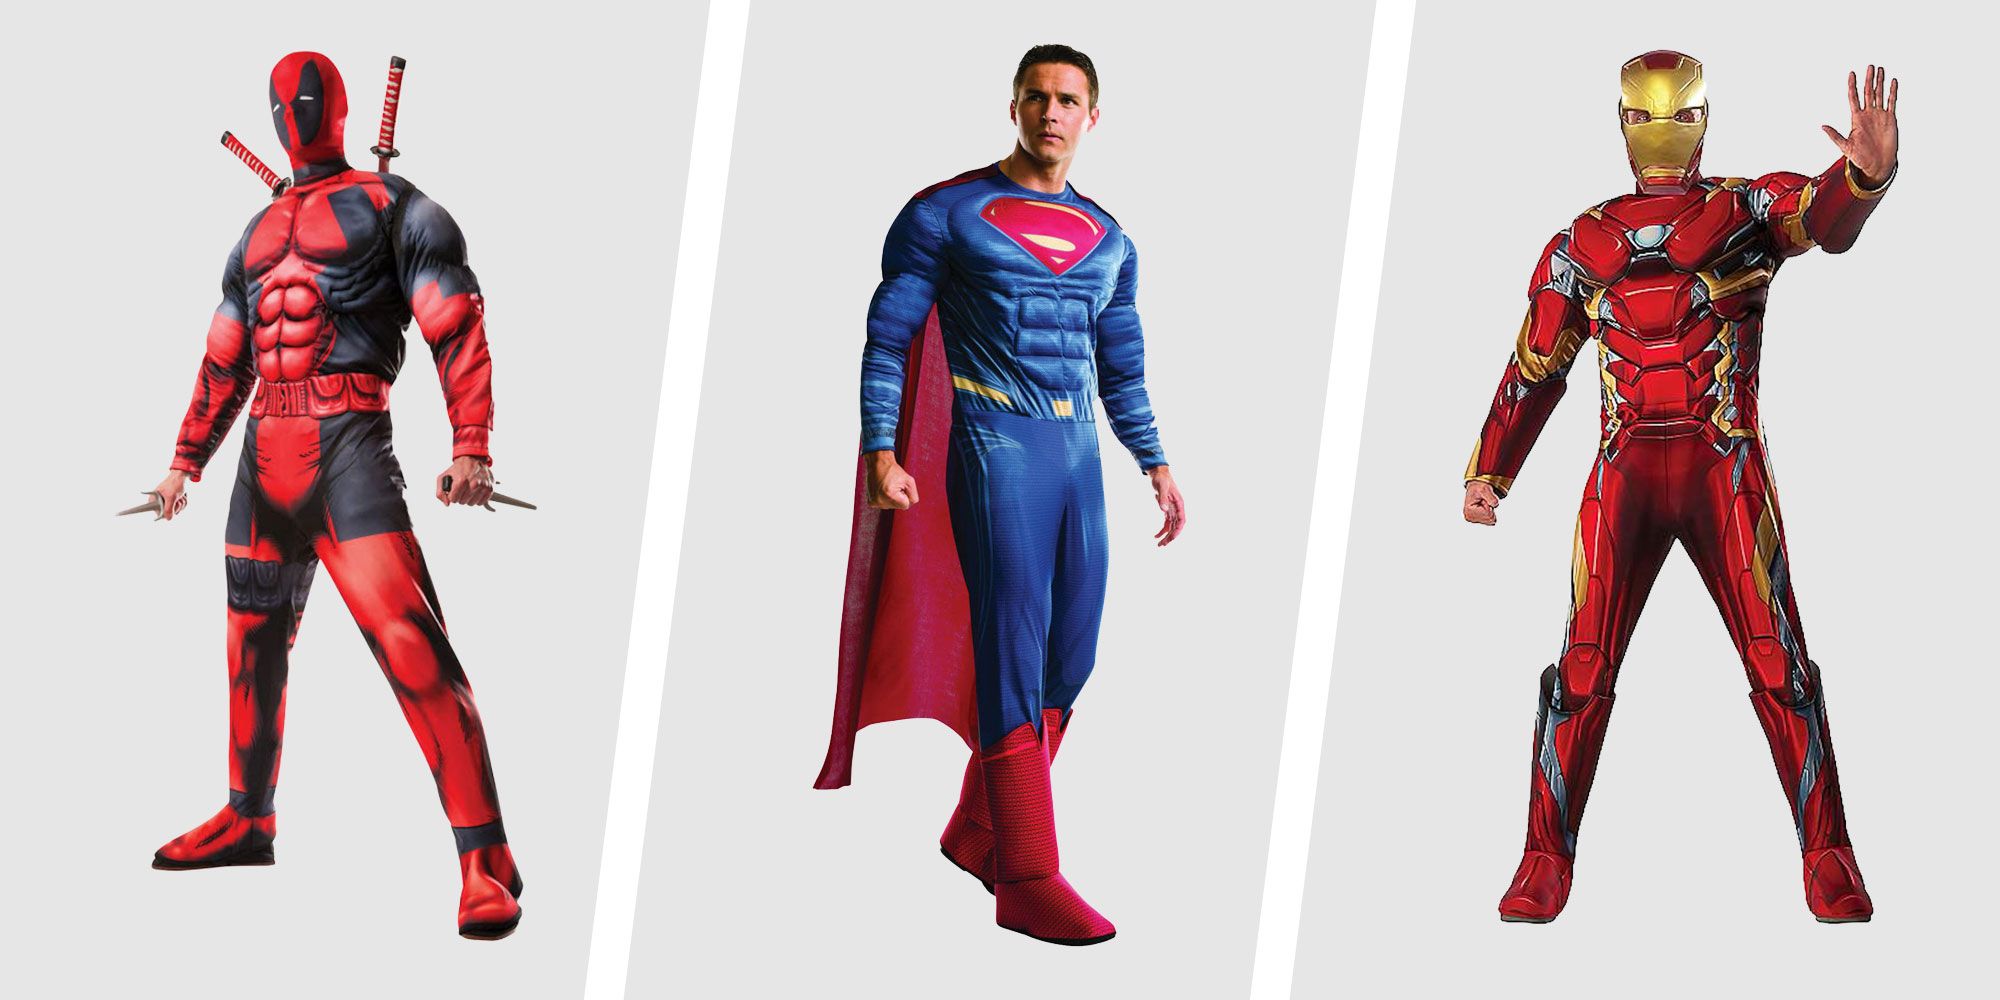 superhero dress up adults